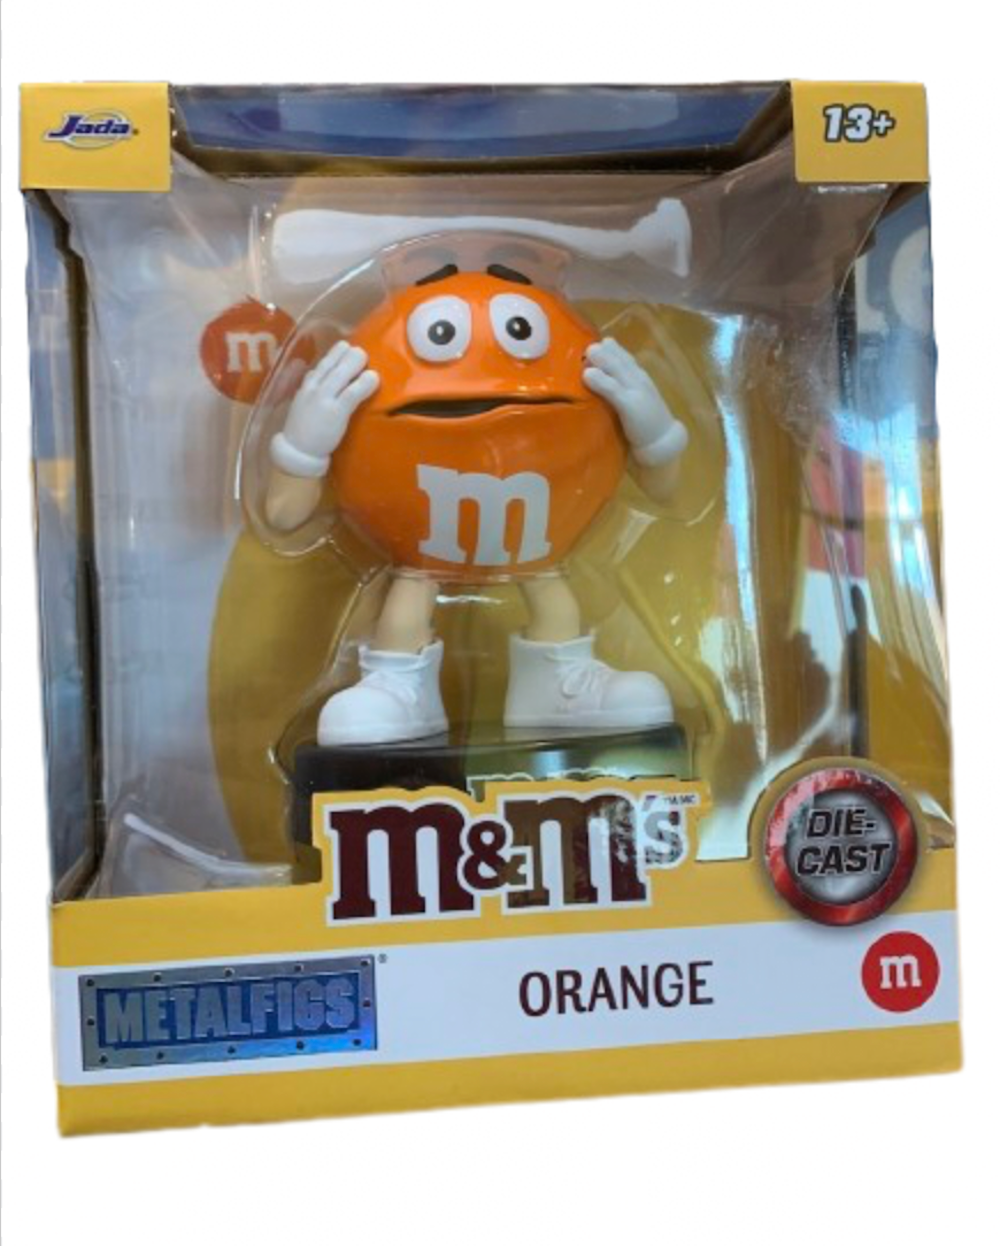 M&M's World Orange Metalfigs Die Cast by Jada Collectible Figurine New With Box